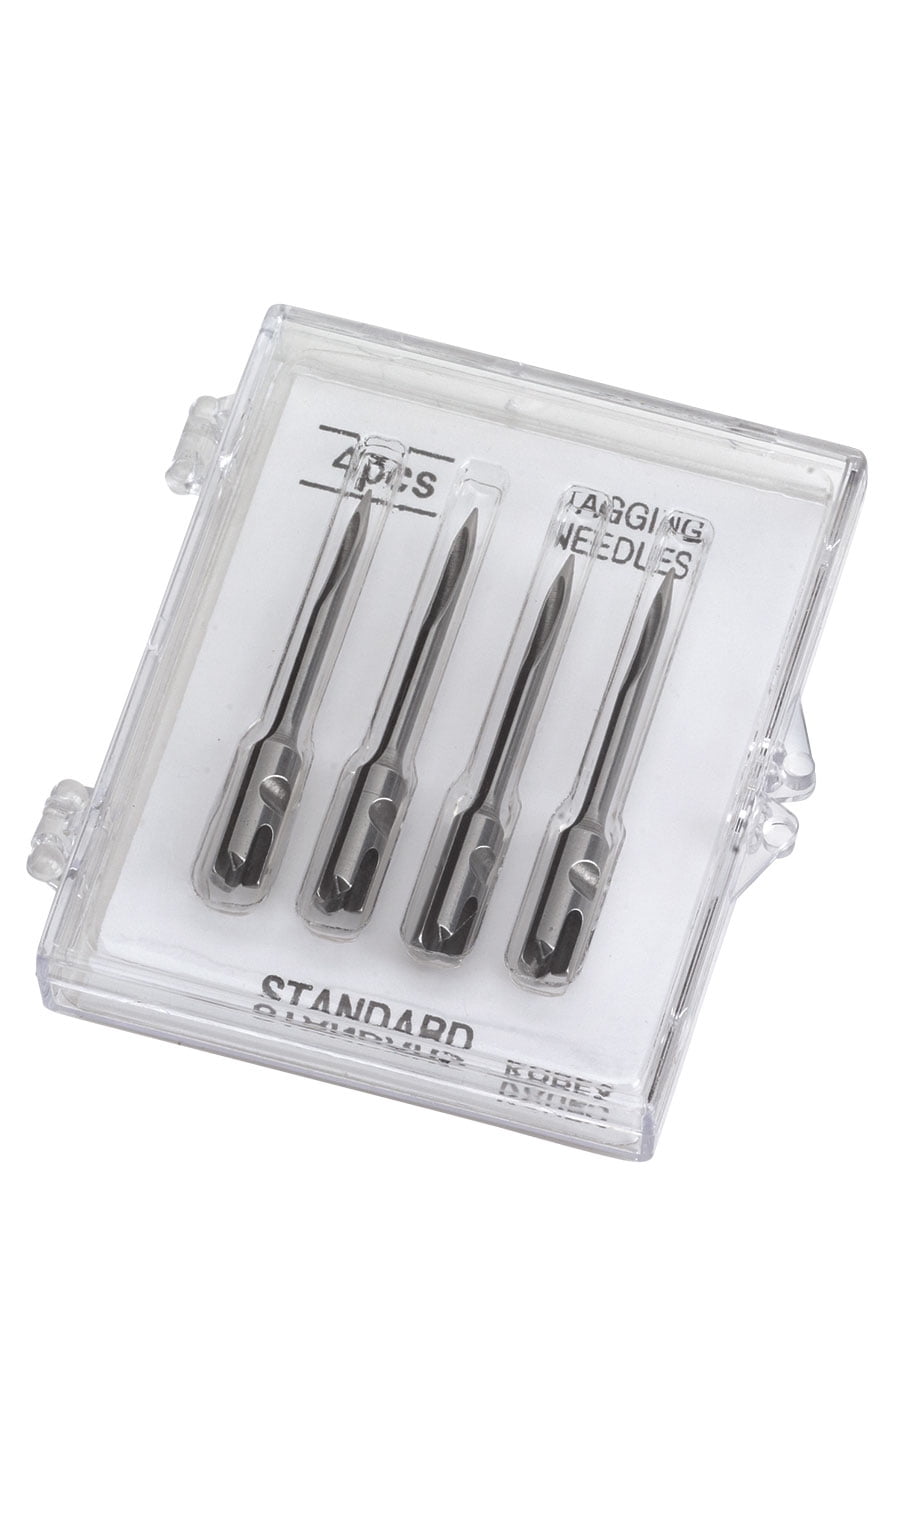 5Pcs Standard Price Tag Gun Needles For Any Standard Label Price Tag AttacB JB 